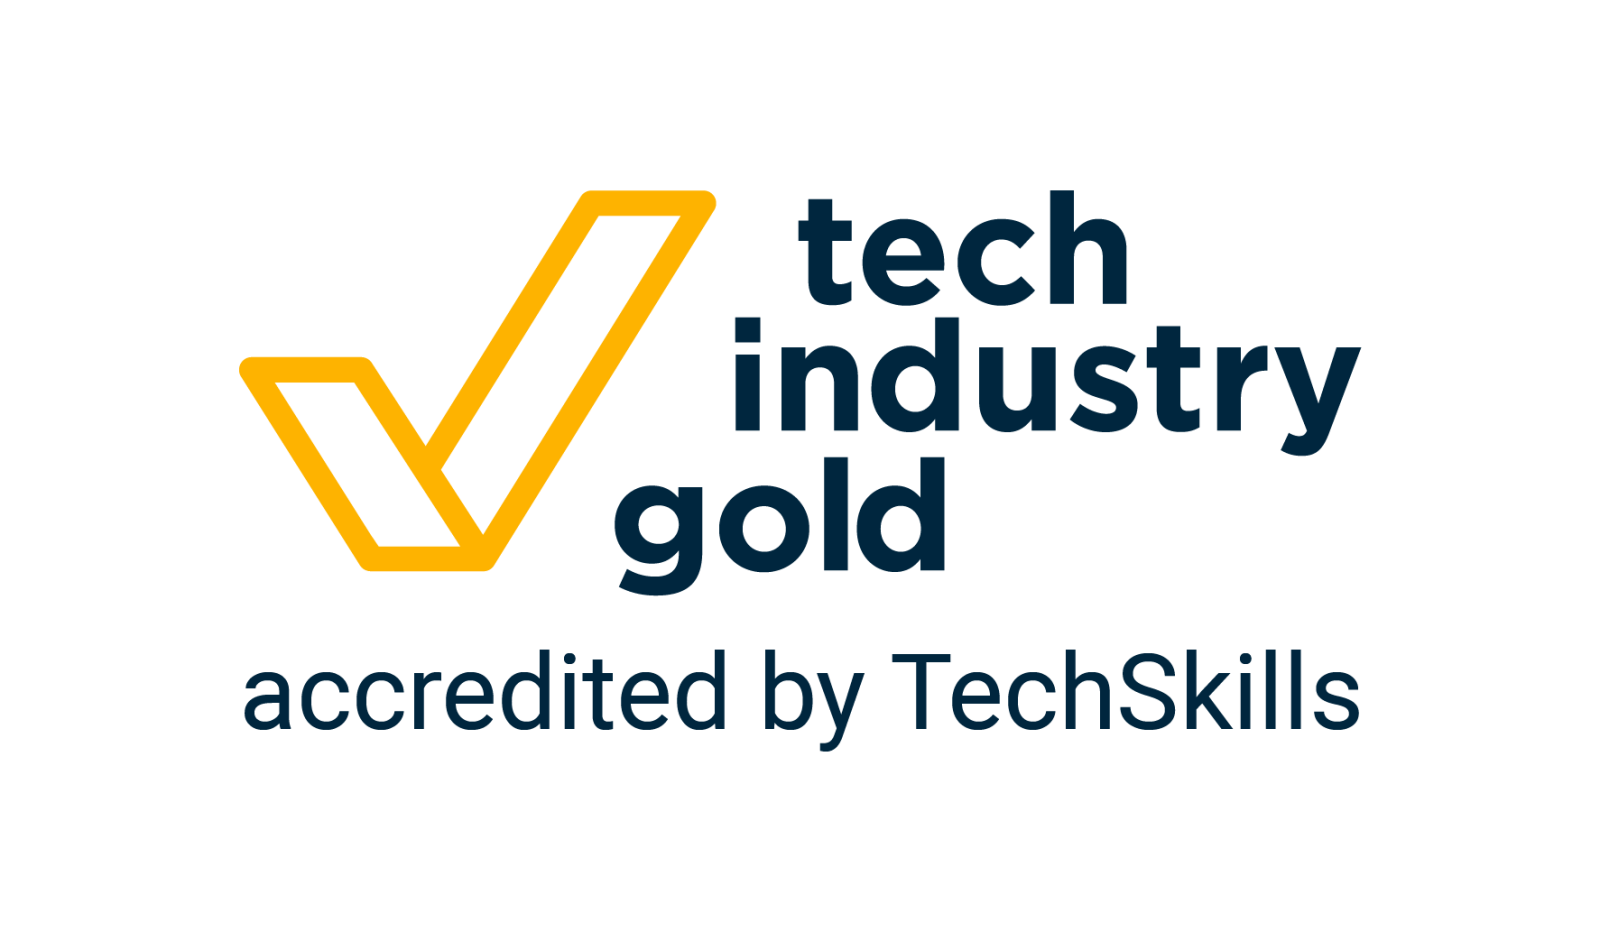 Tech Industry Gold logo